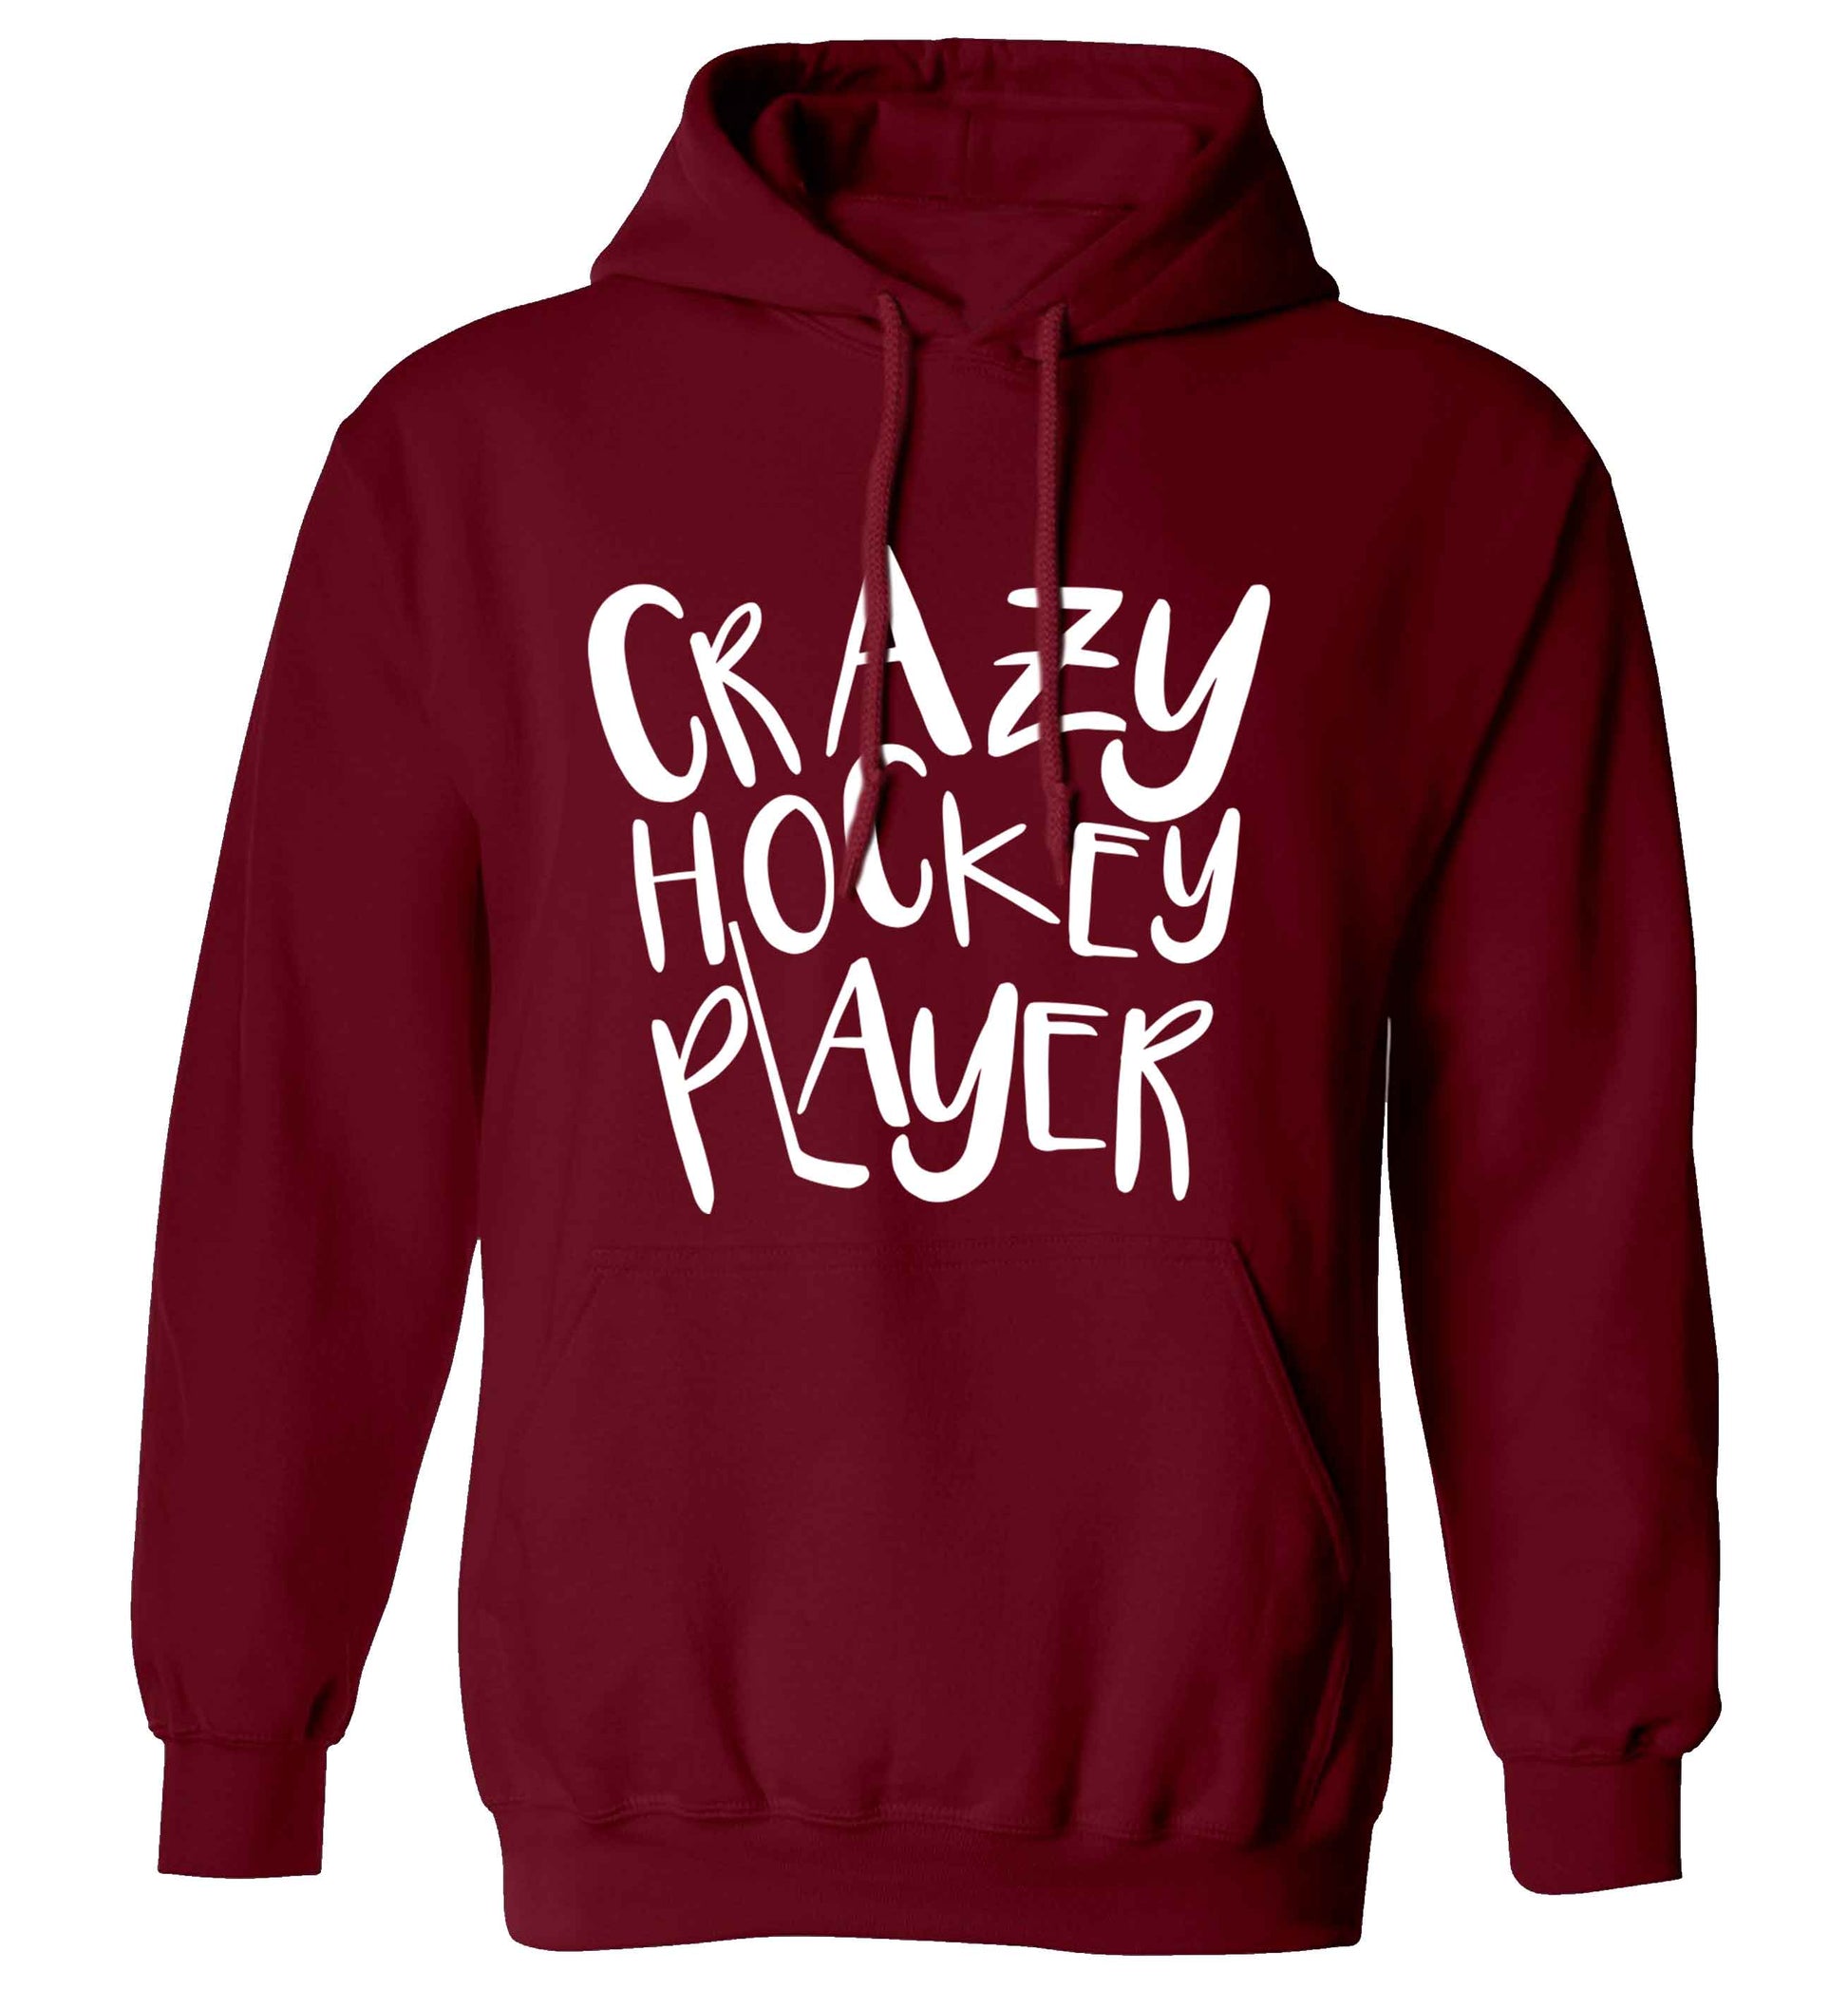 Crazy hockey player adults unisex maroon hoodie 2XL